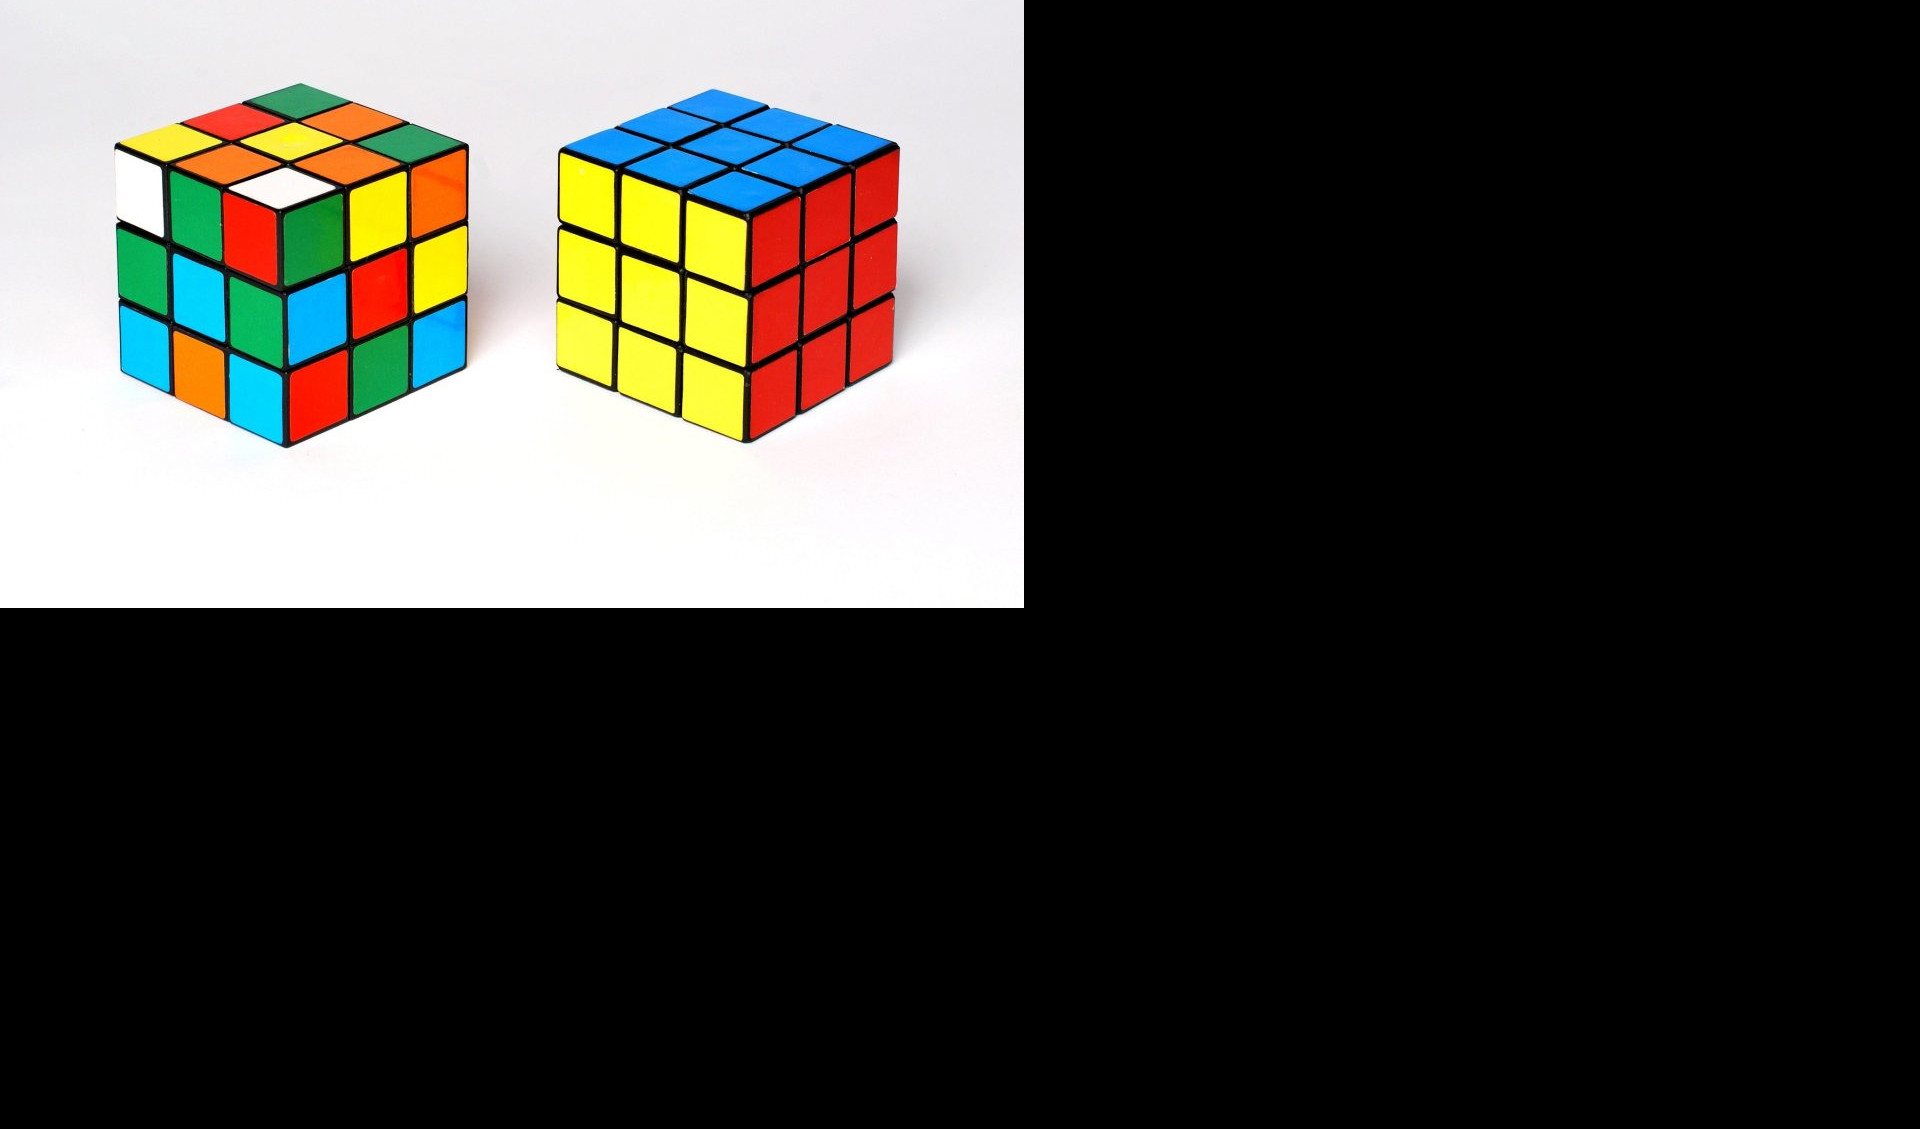 DEČAK OBORIO GINISOV REKORD! Slagao TRI Rubikove kocke ISTOVREMENO RUKAMA I NOGAMA!